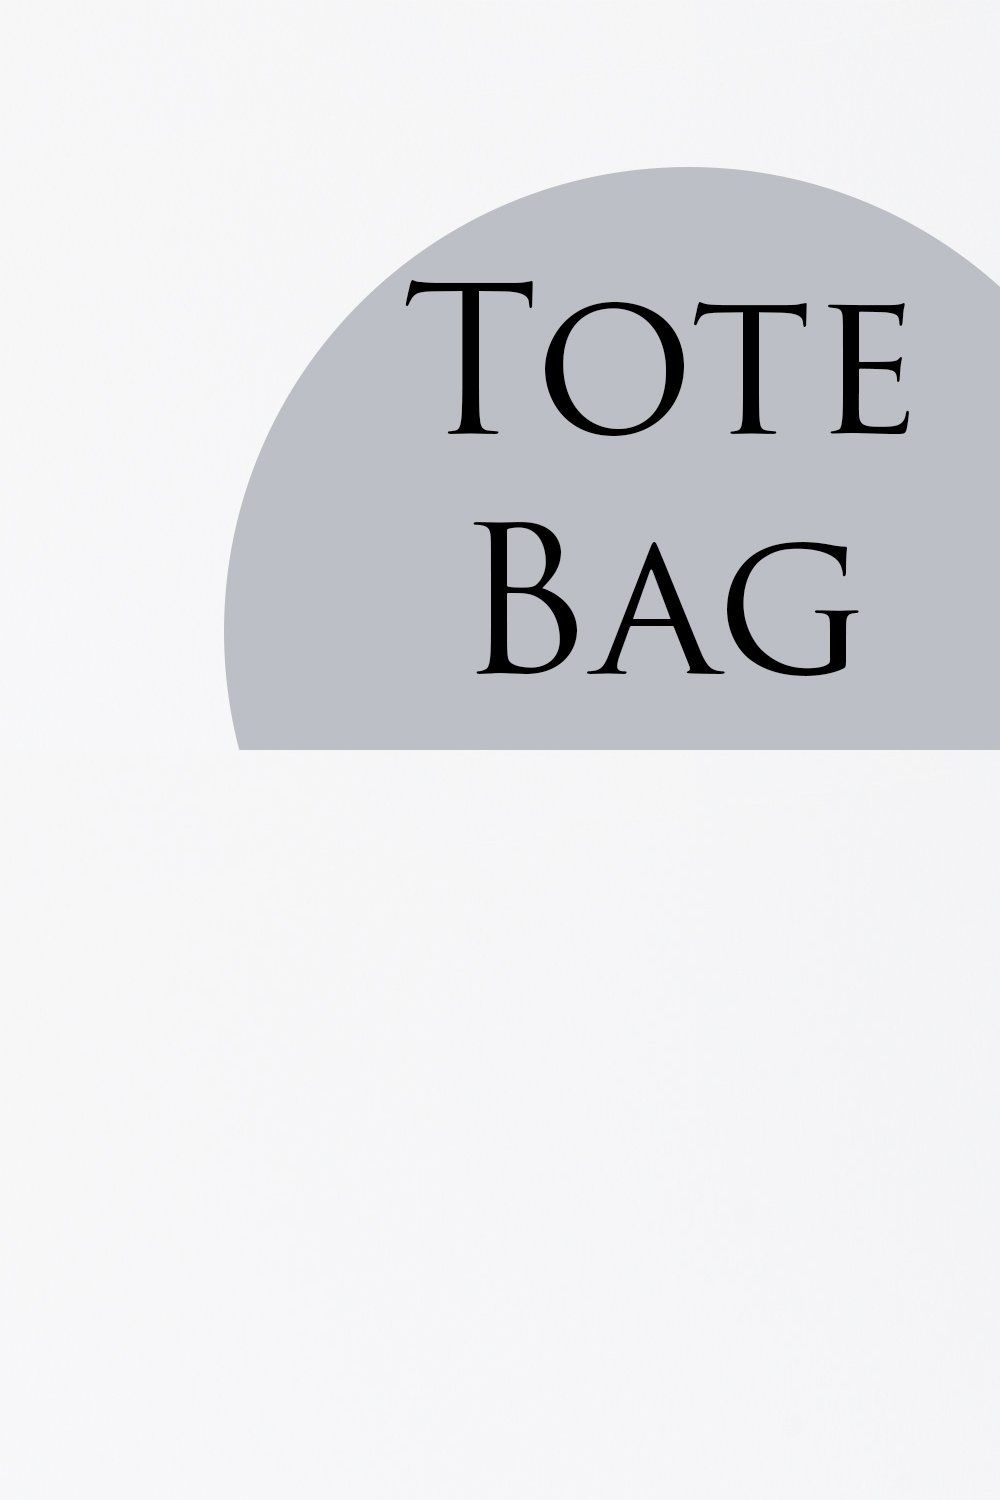 Tote Bag mockup - Woman carrying bag pinterest preview image.